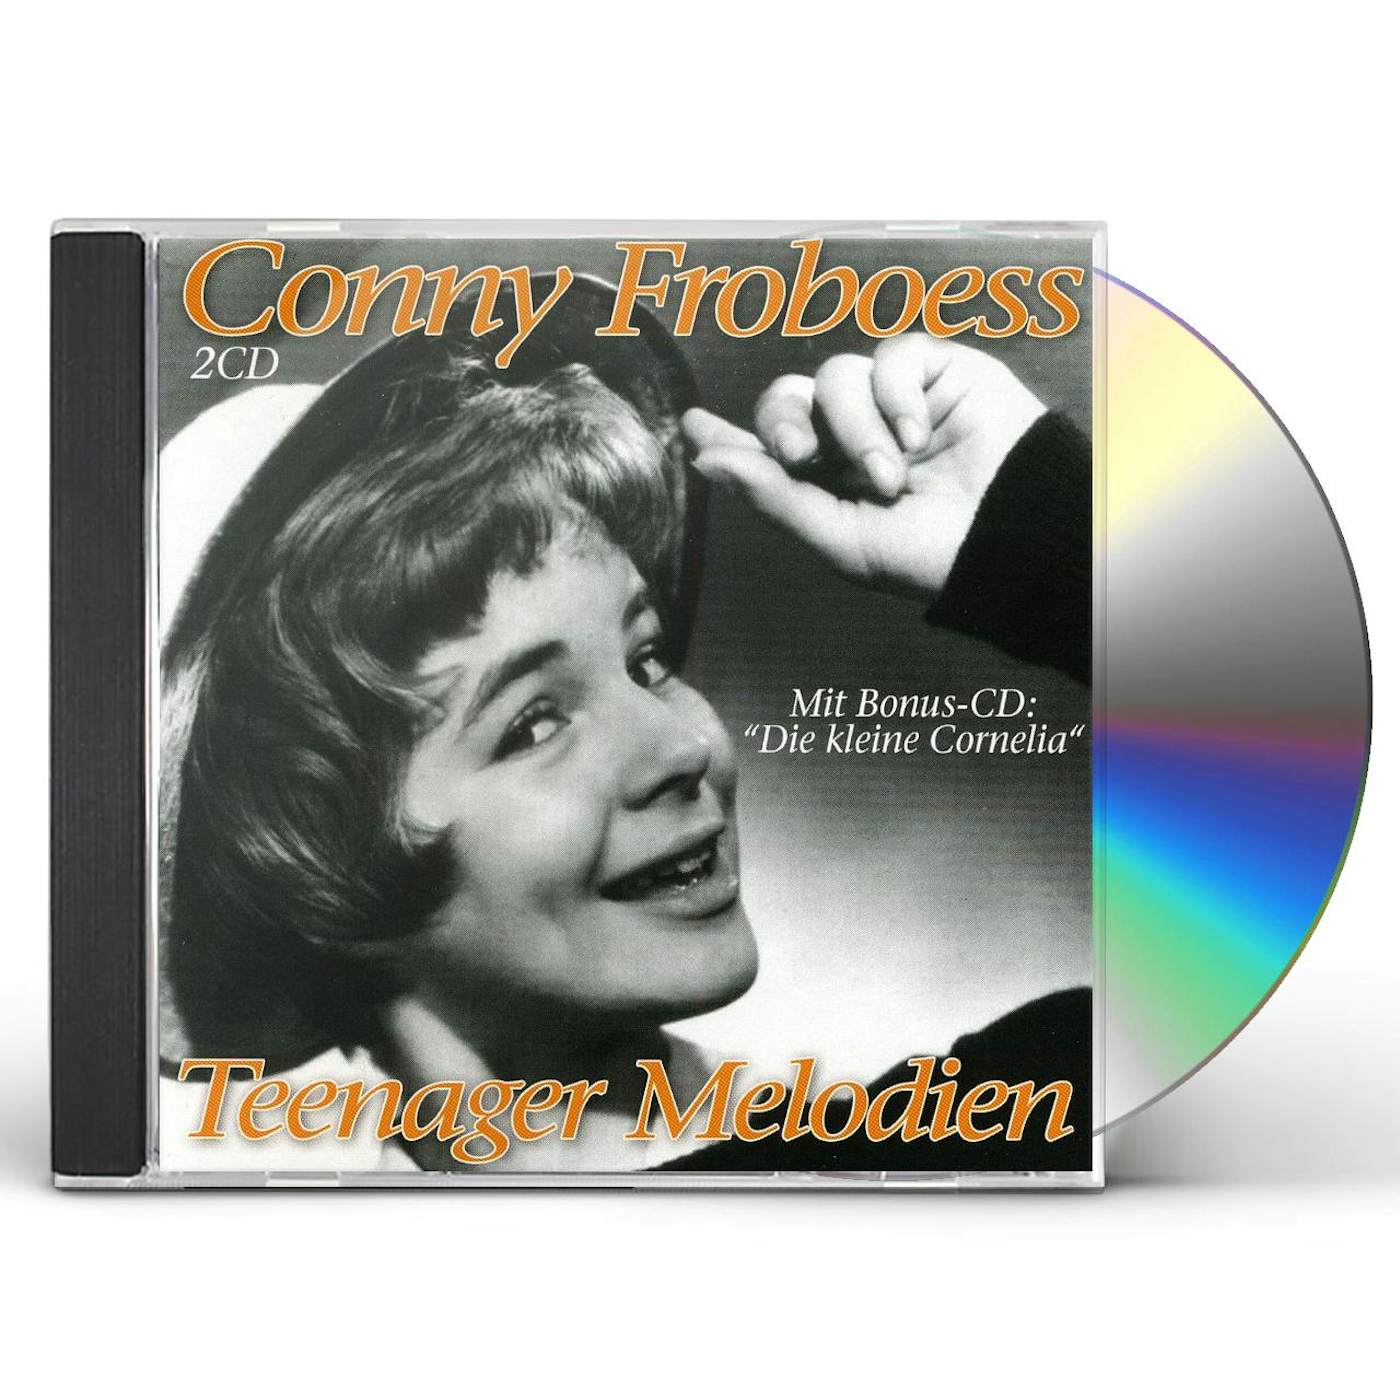 Conny Froboess TEENAGER MELODIEN CD